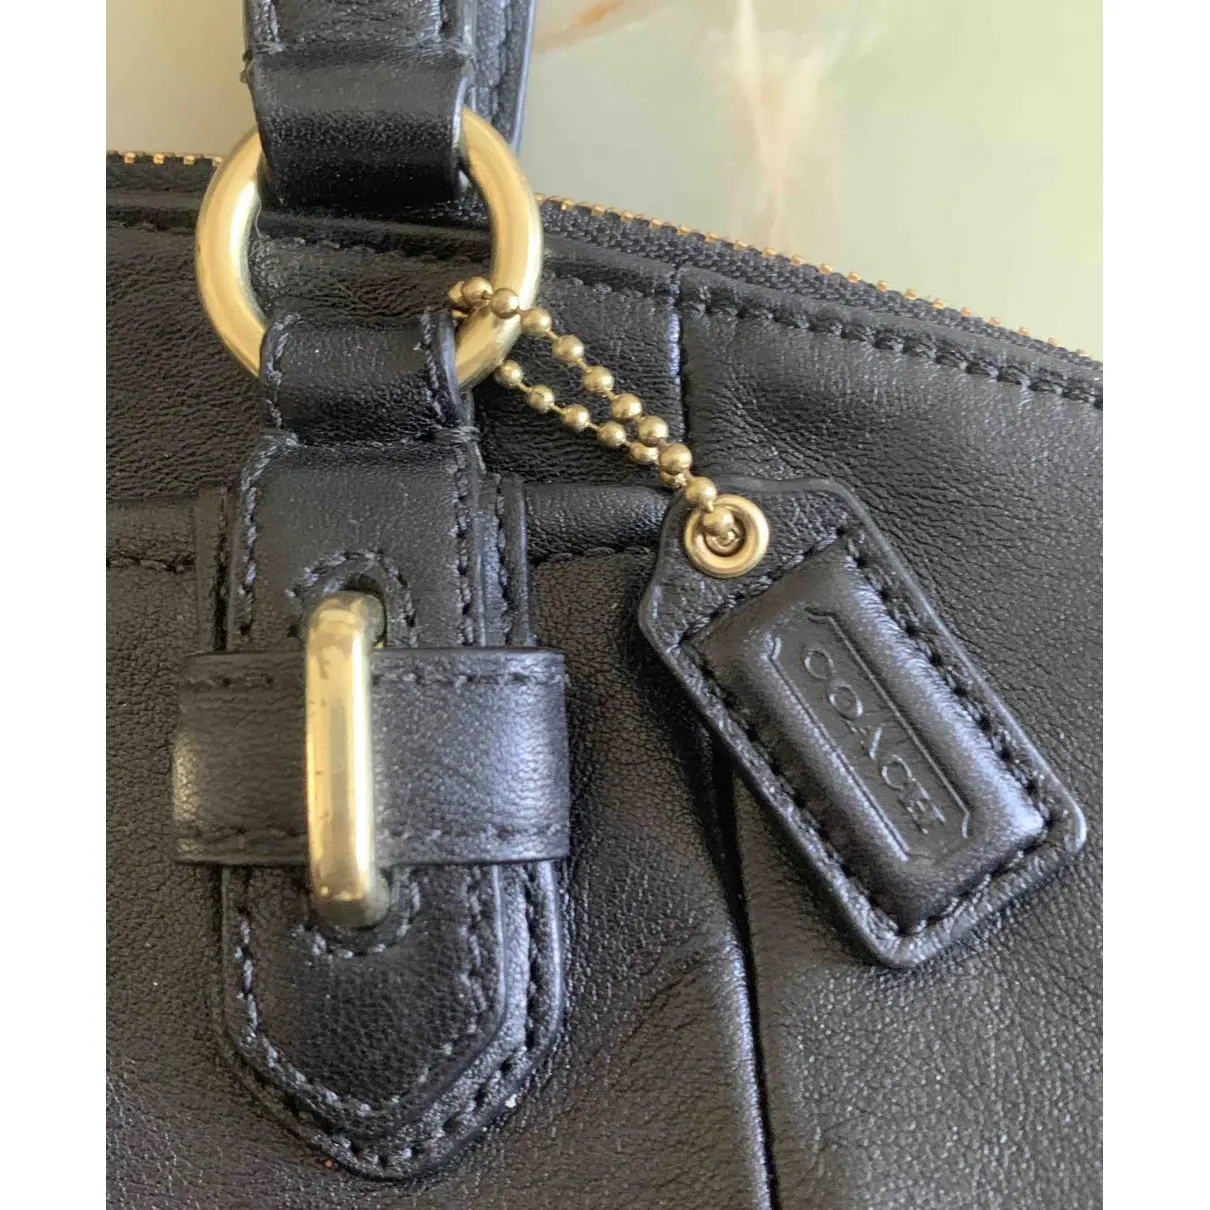 Madison leather handbag Coach